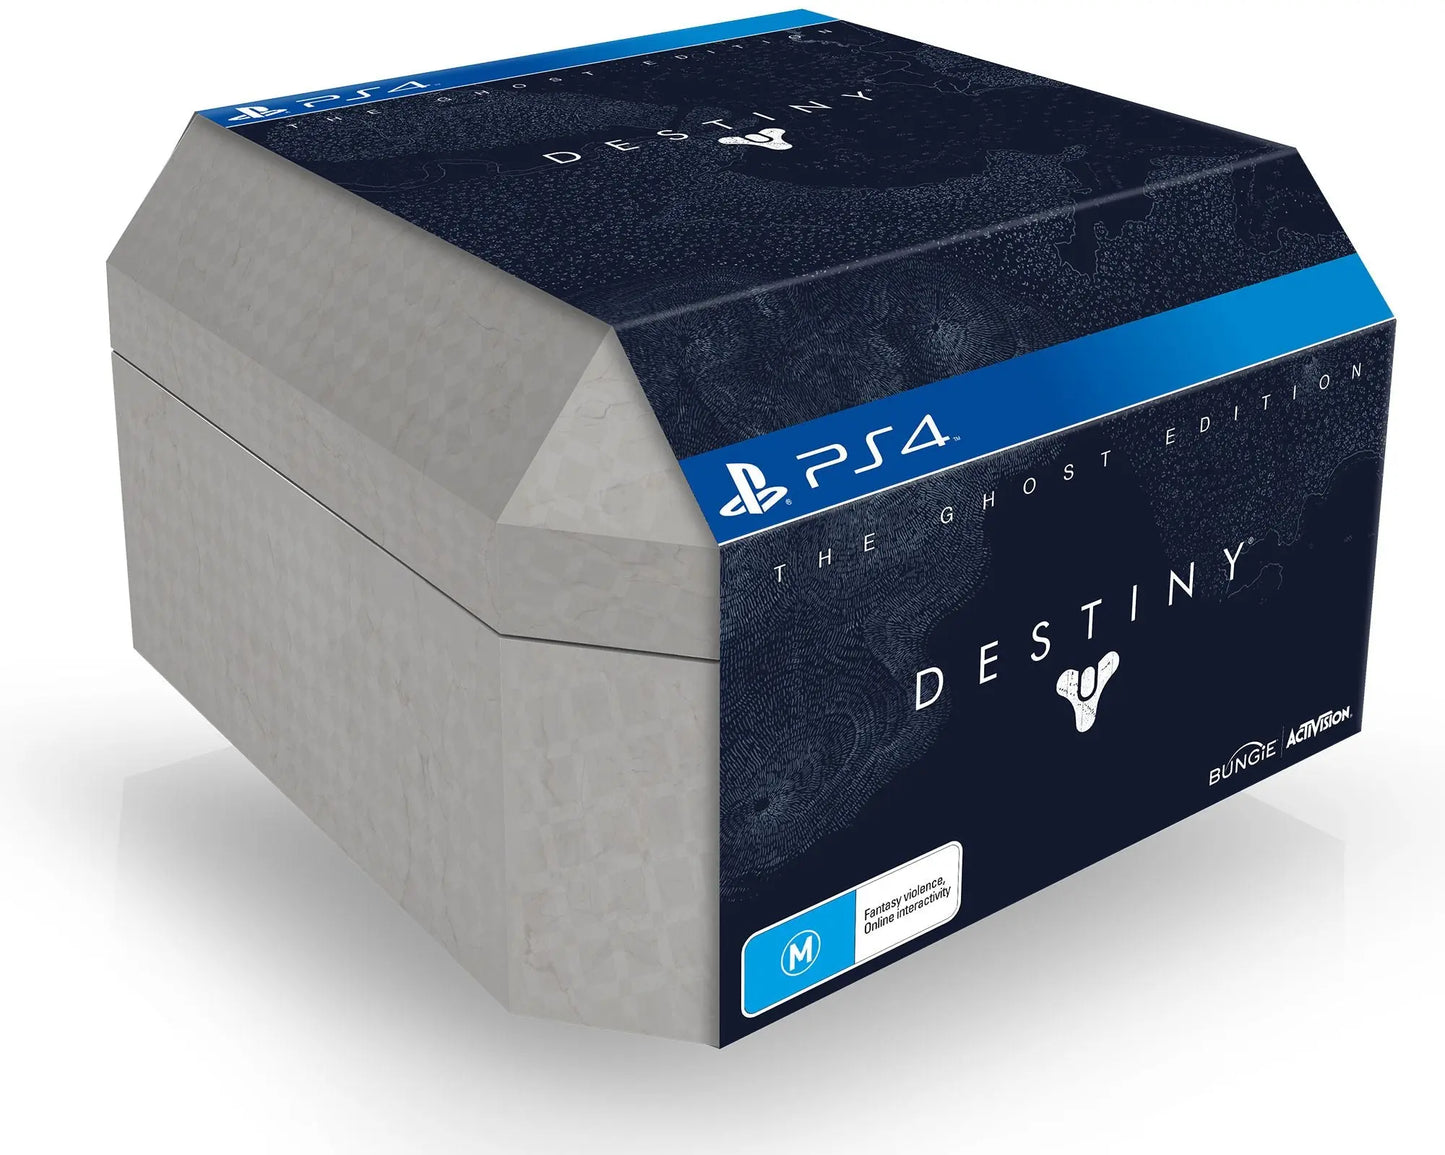 Destiny The Ghost Edition Spectre PS4 Tecin.fr